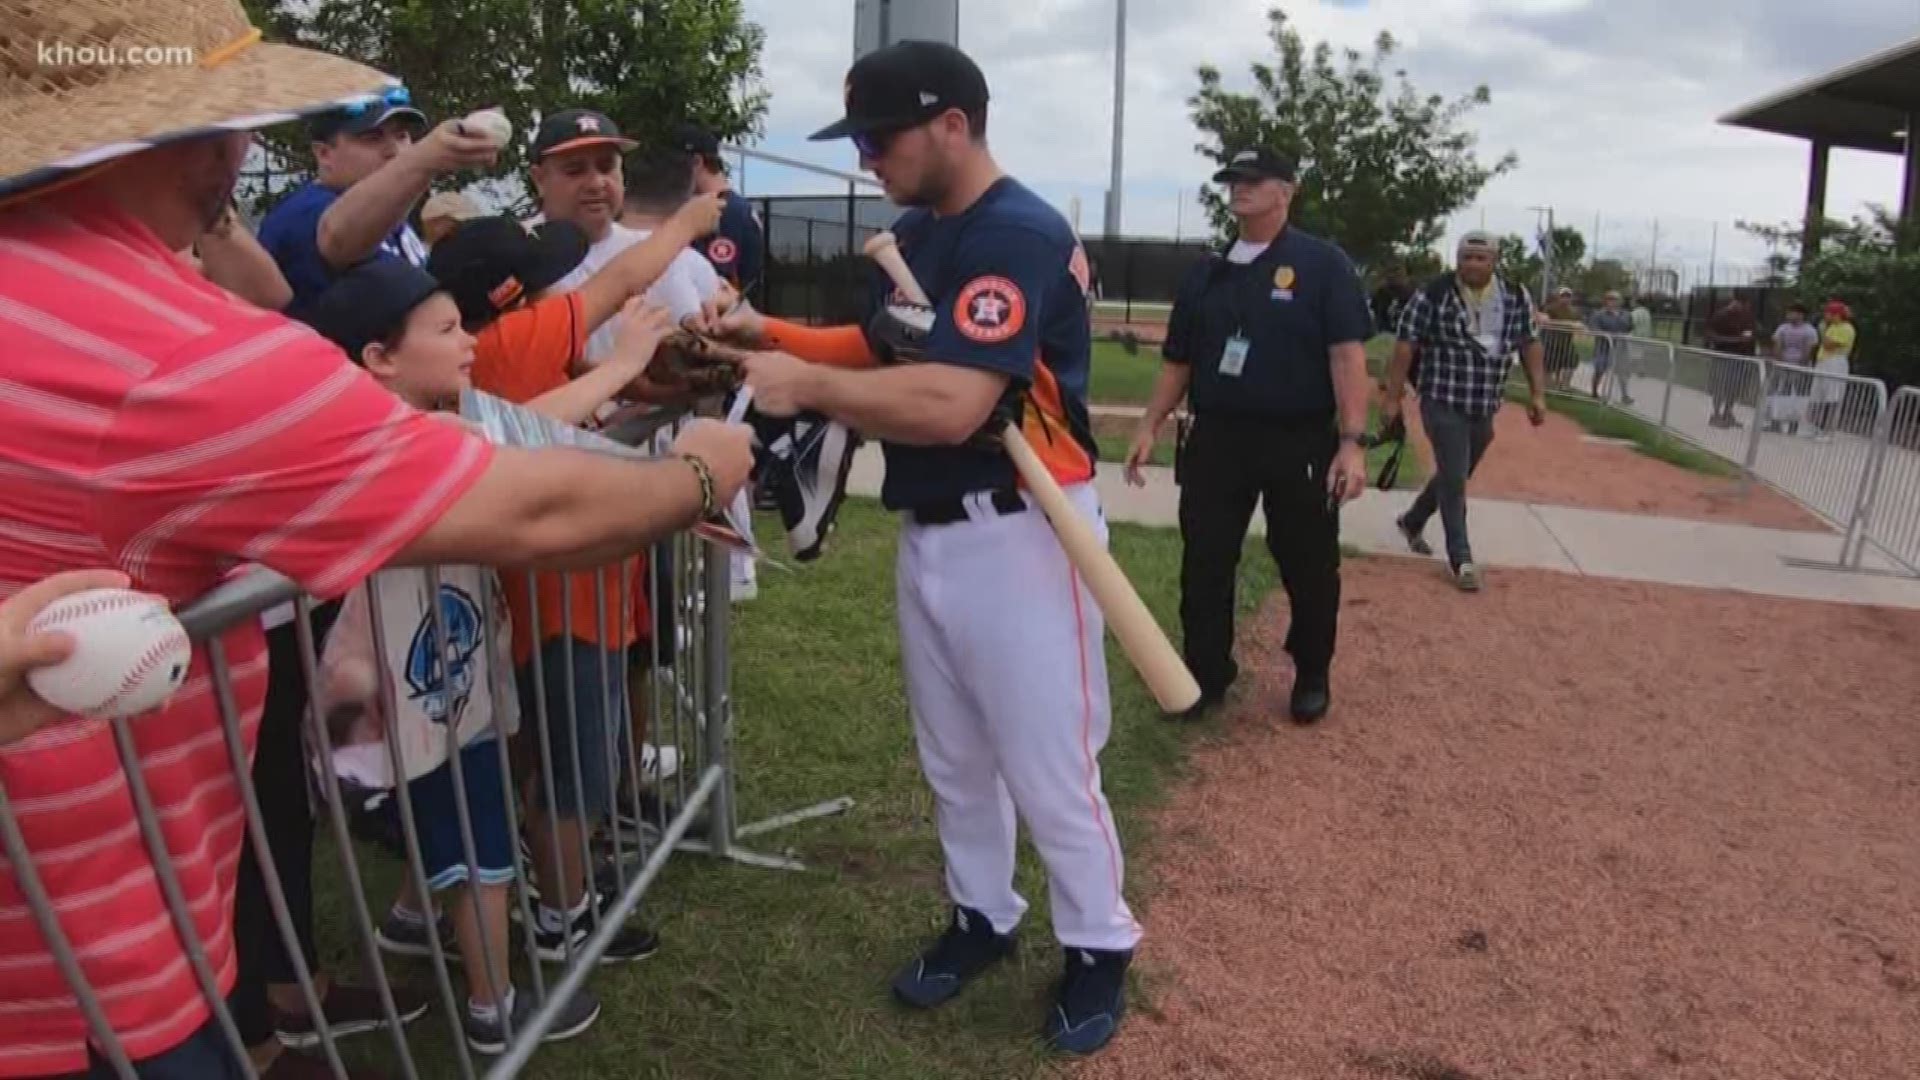 Fans heckling Astros spring opener get signs stolen